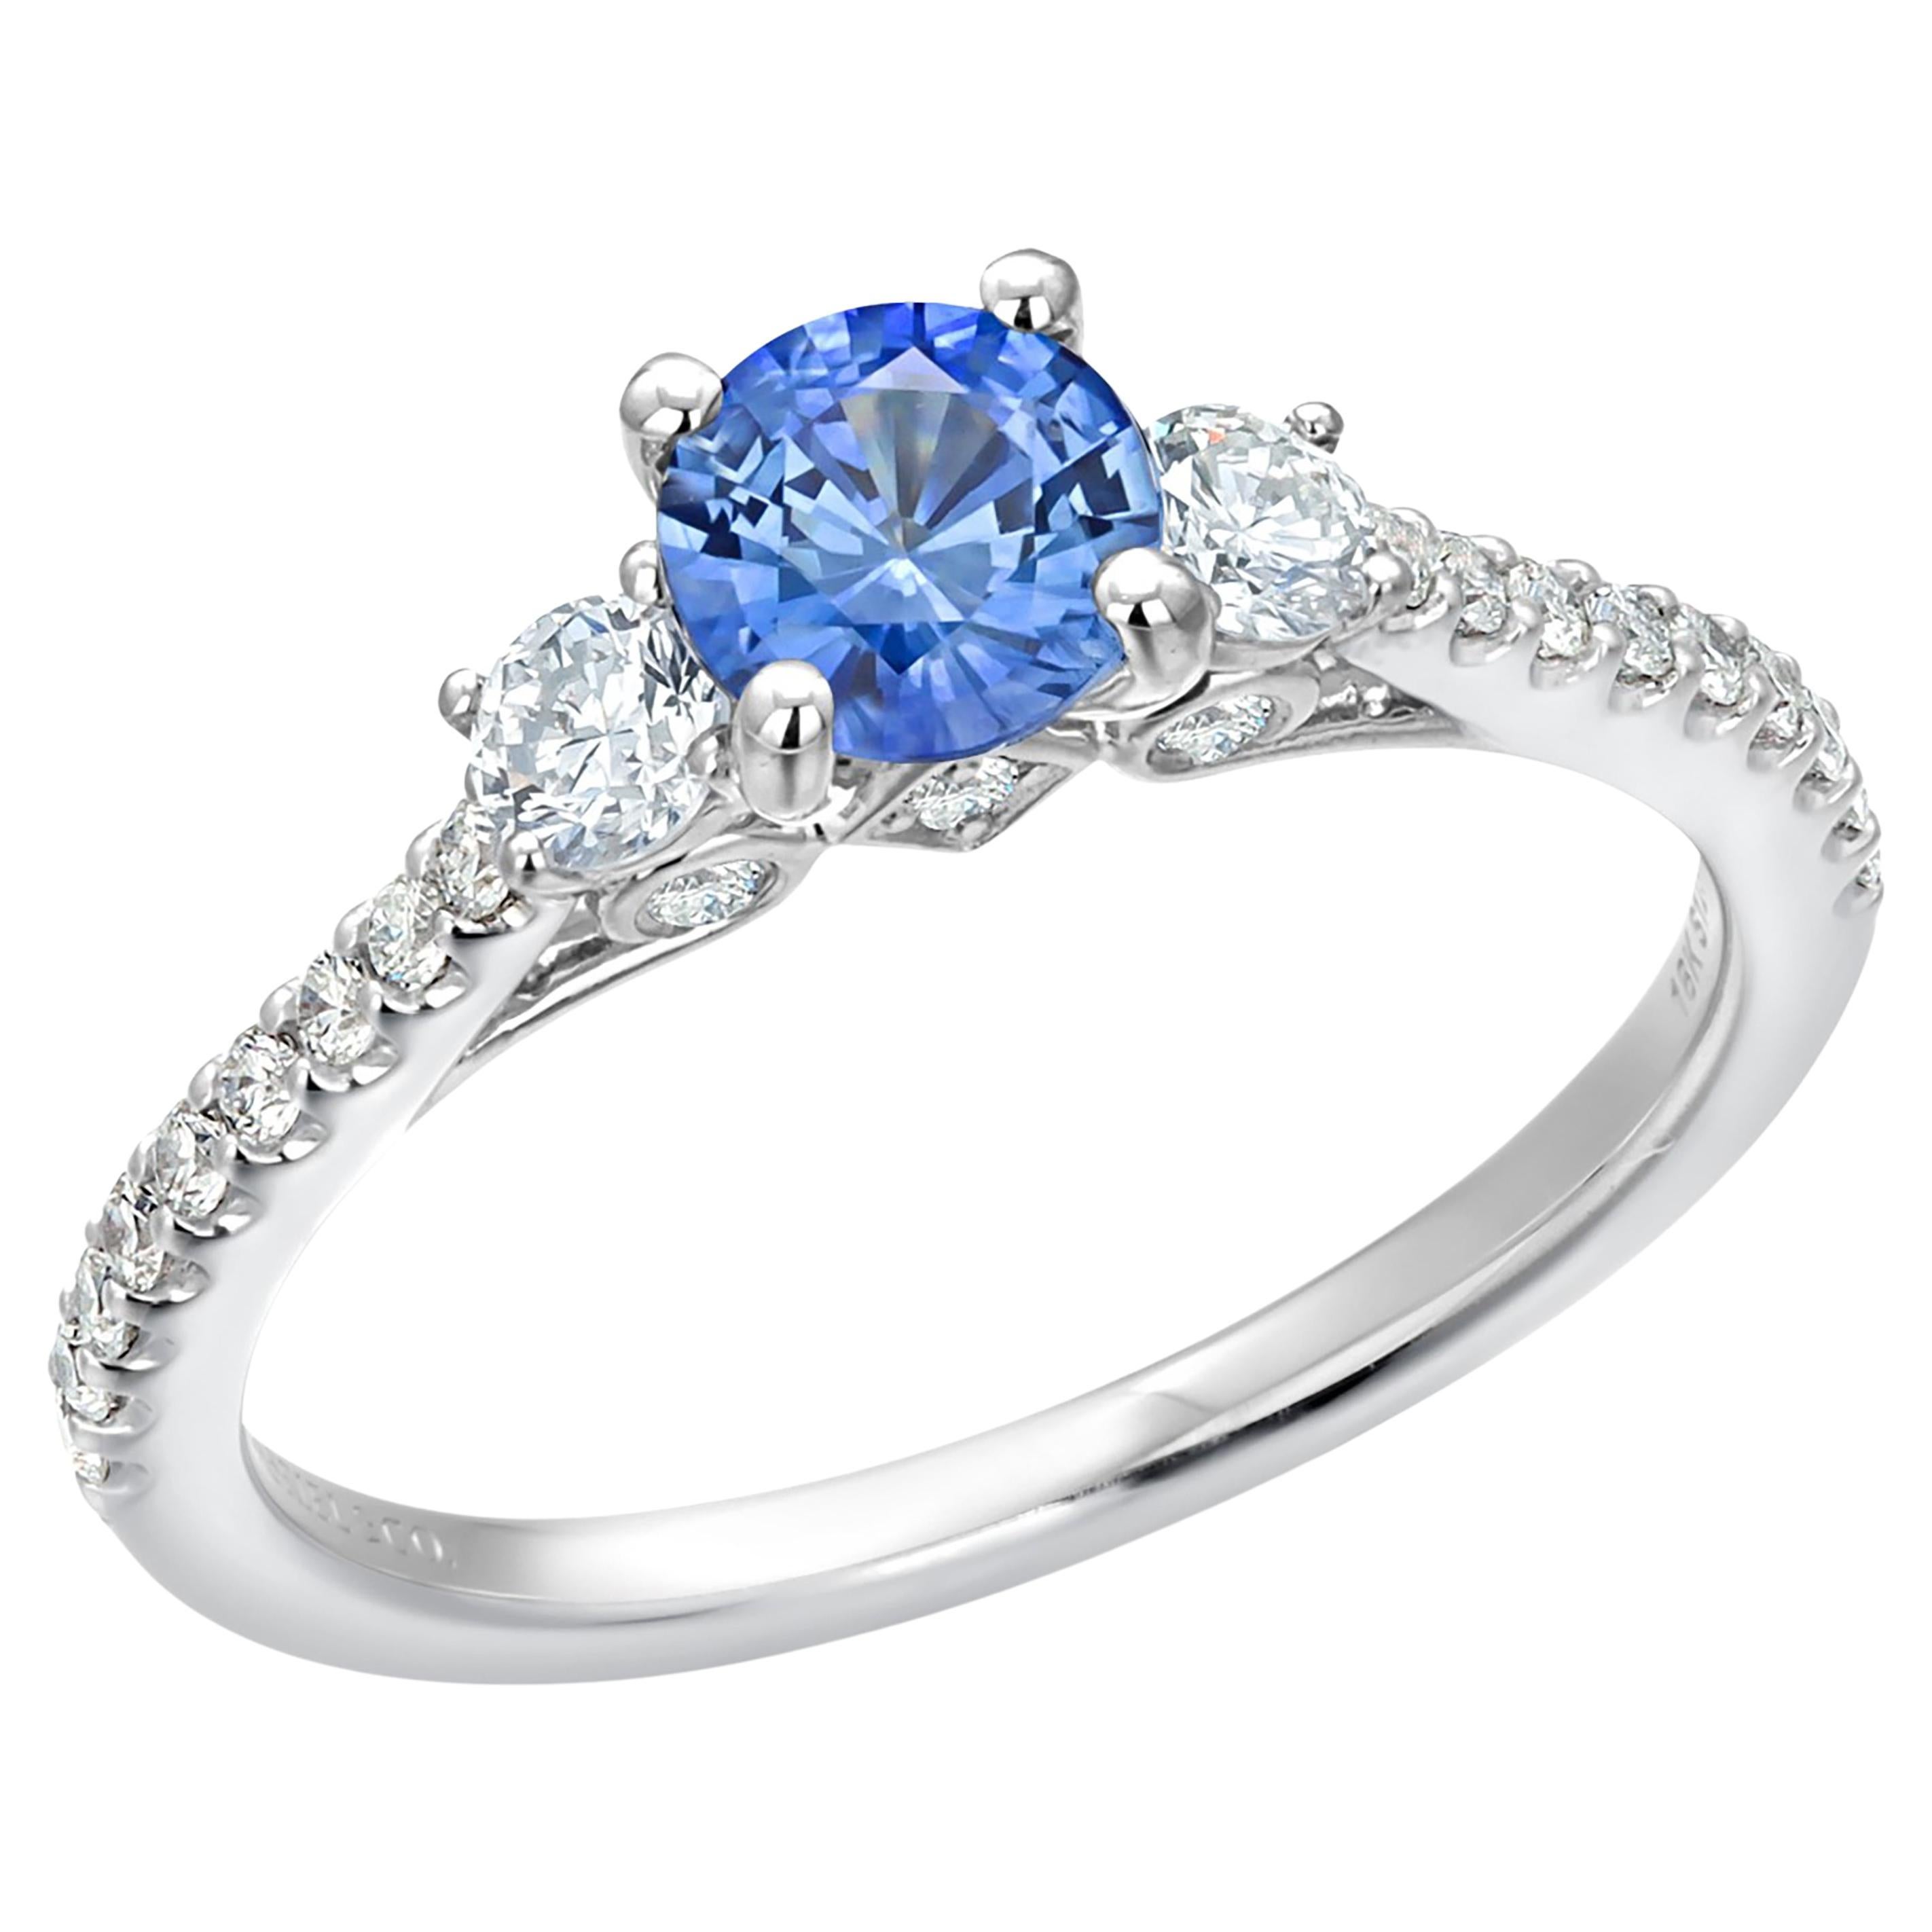  18 Karat White Gold Diamond and Ceylon Sapphire 1.53 Carat Engagement Ring